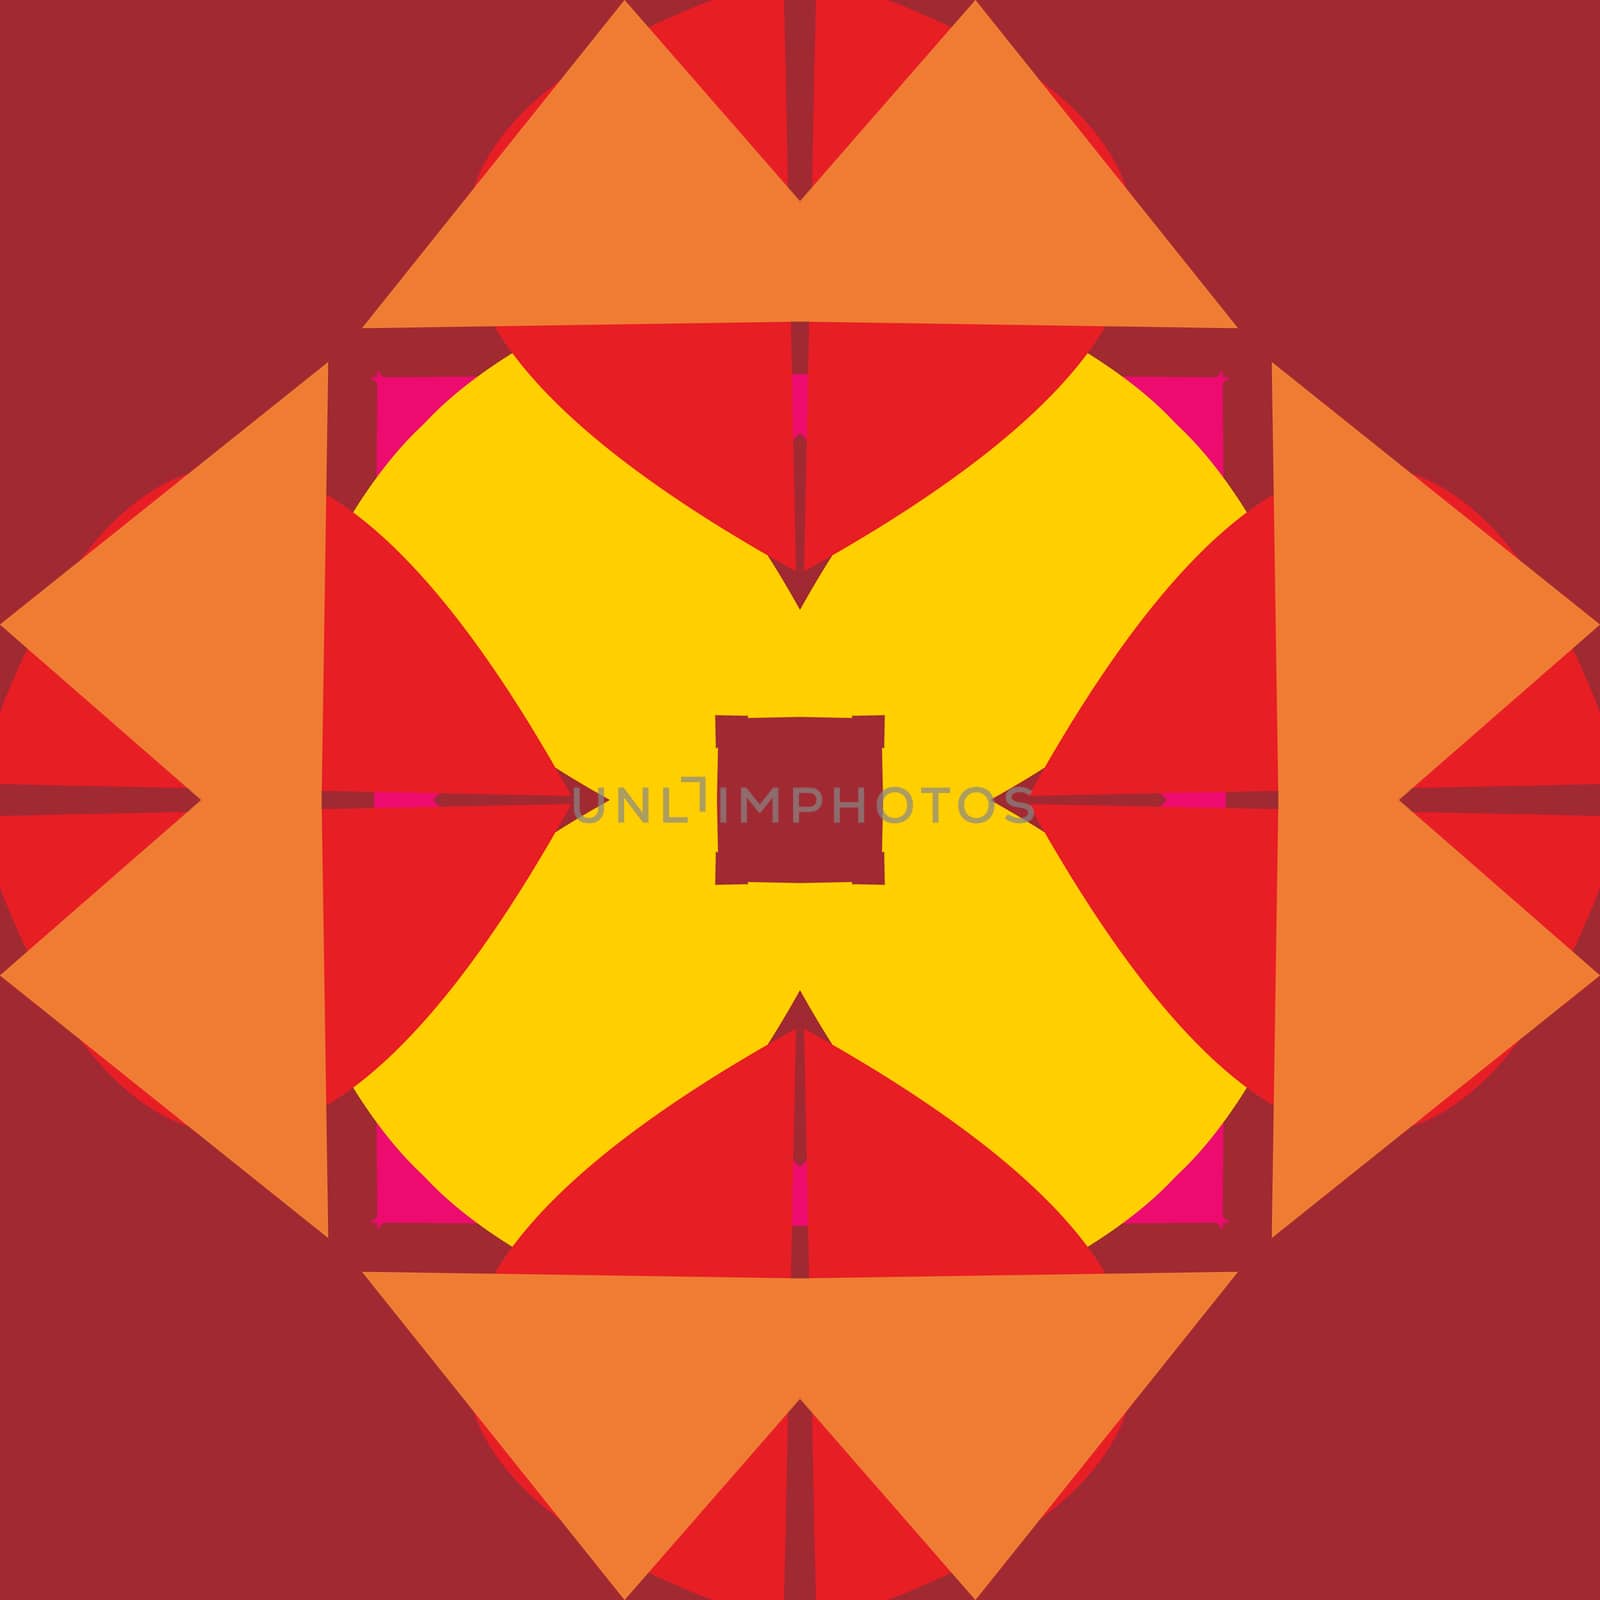 Symmetrical yellow and orange tile shape pattern